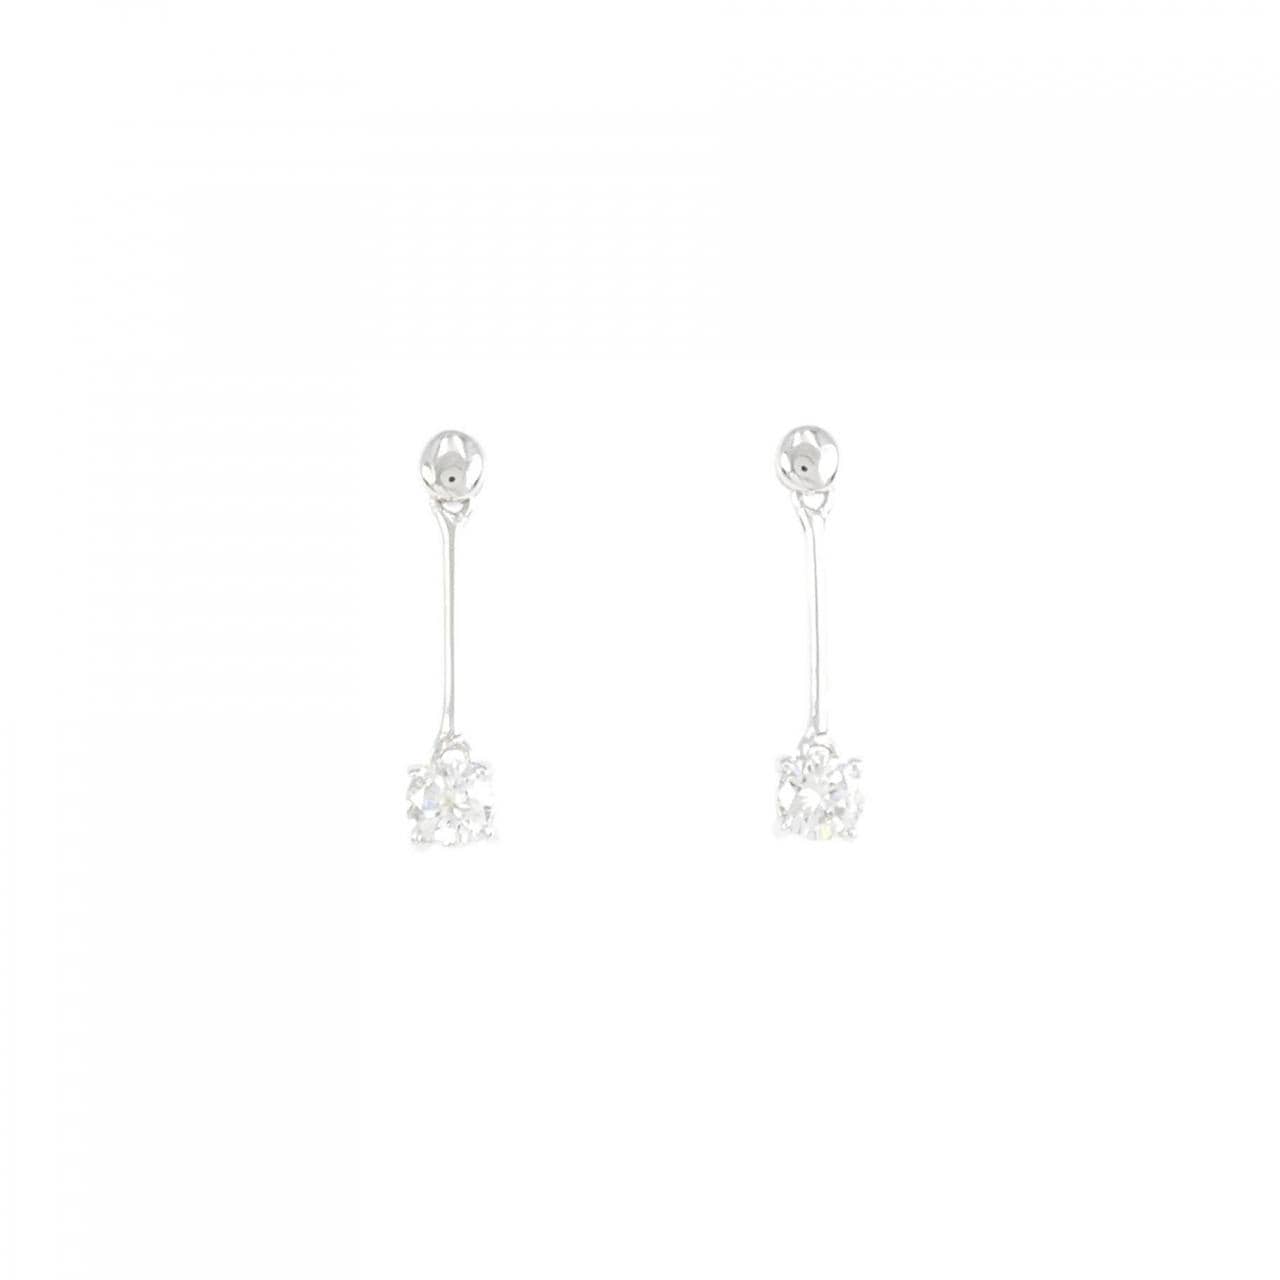 750WG/K18WG Diamond earrings